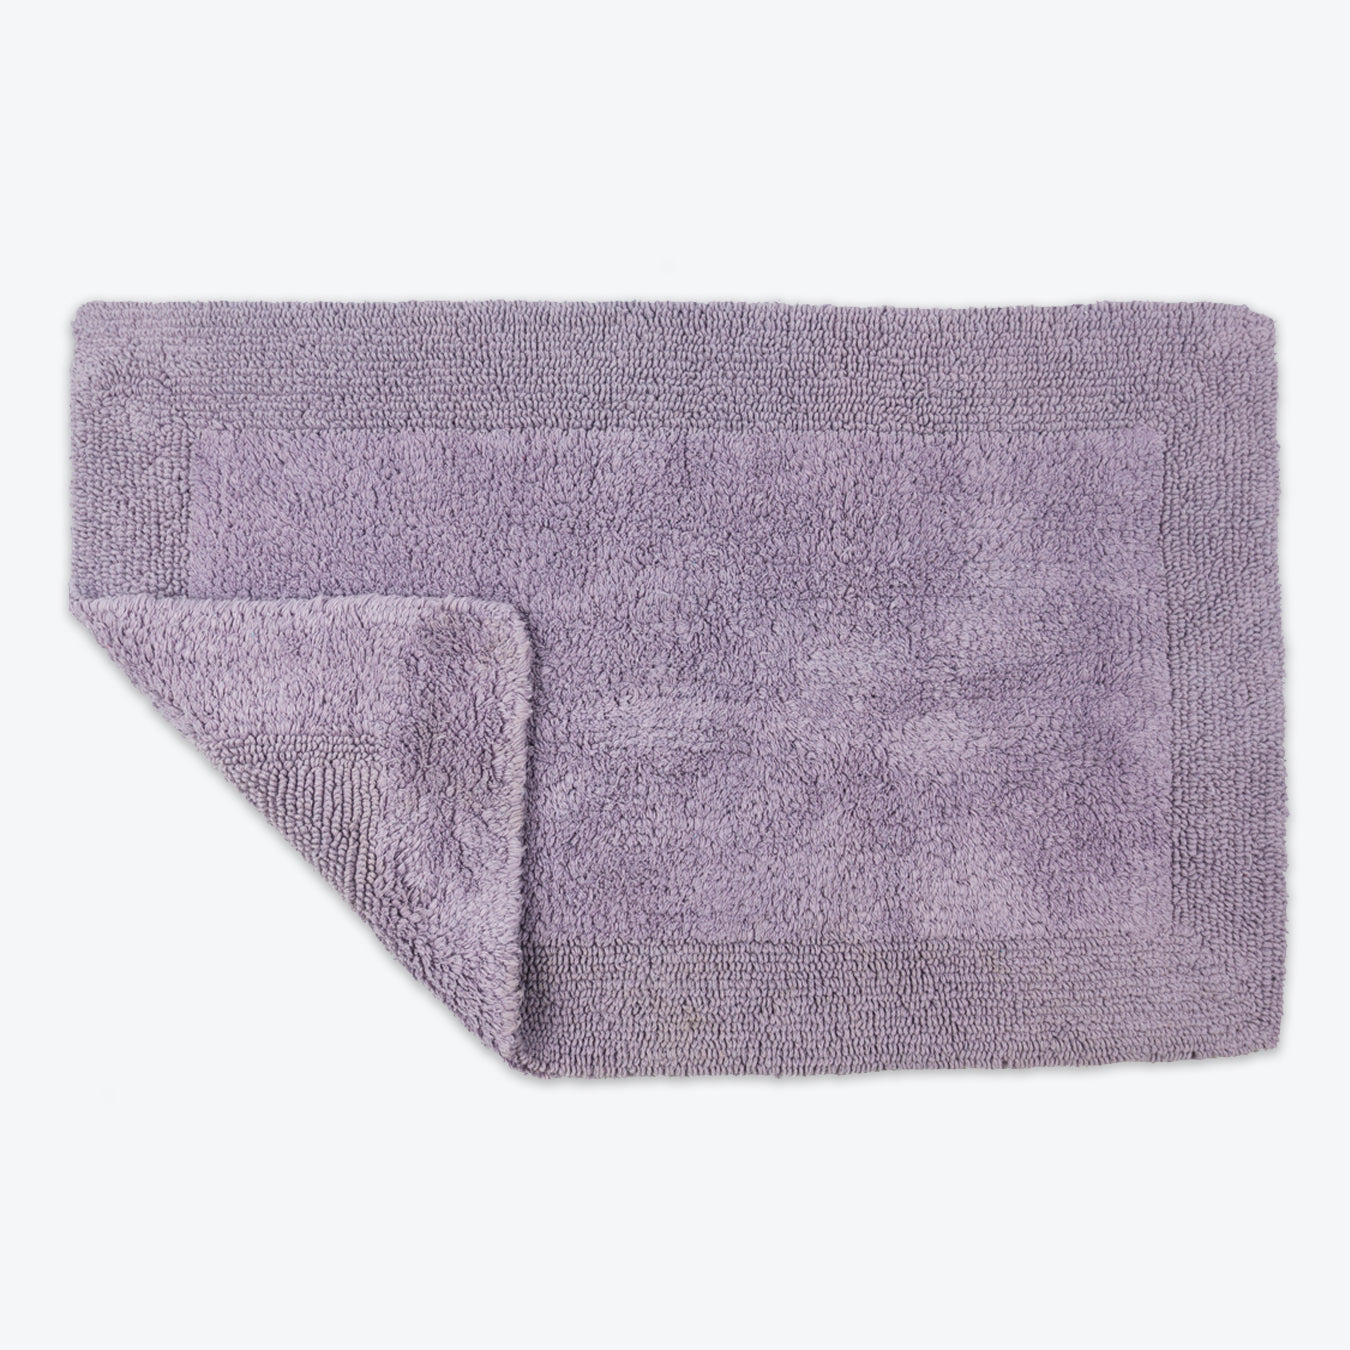 Heather Reversible Cotton Large Bath Mat - Luxury Thick Bathmat